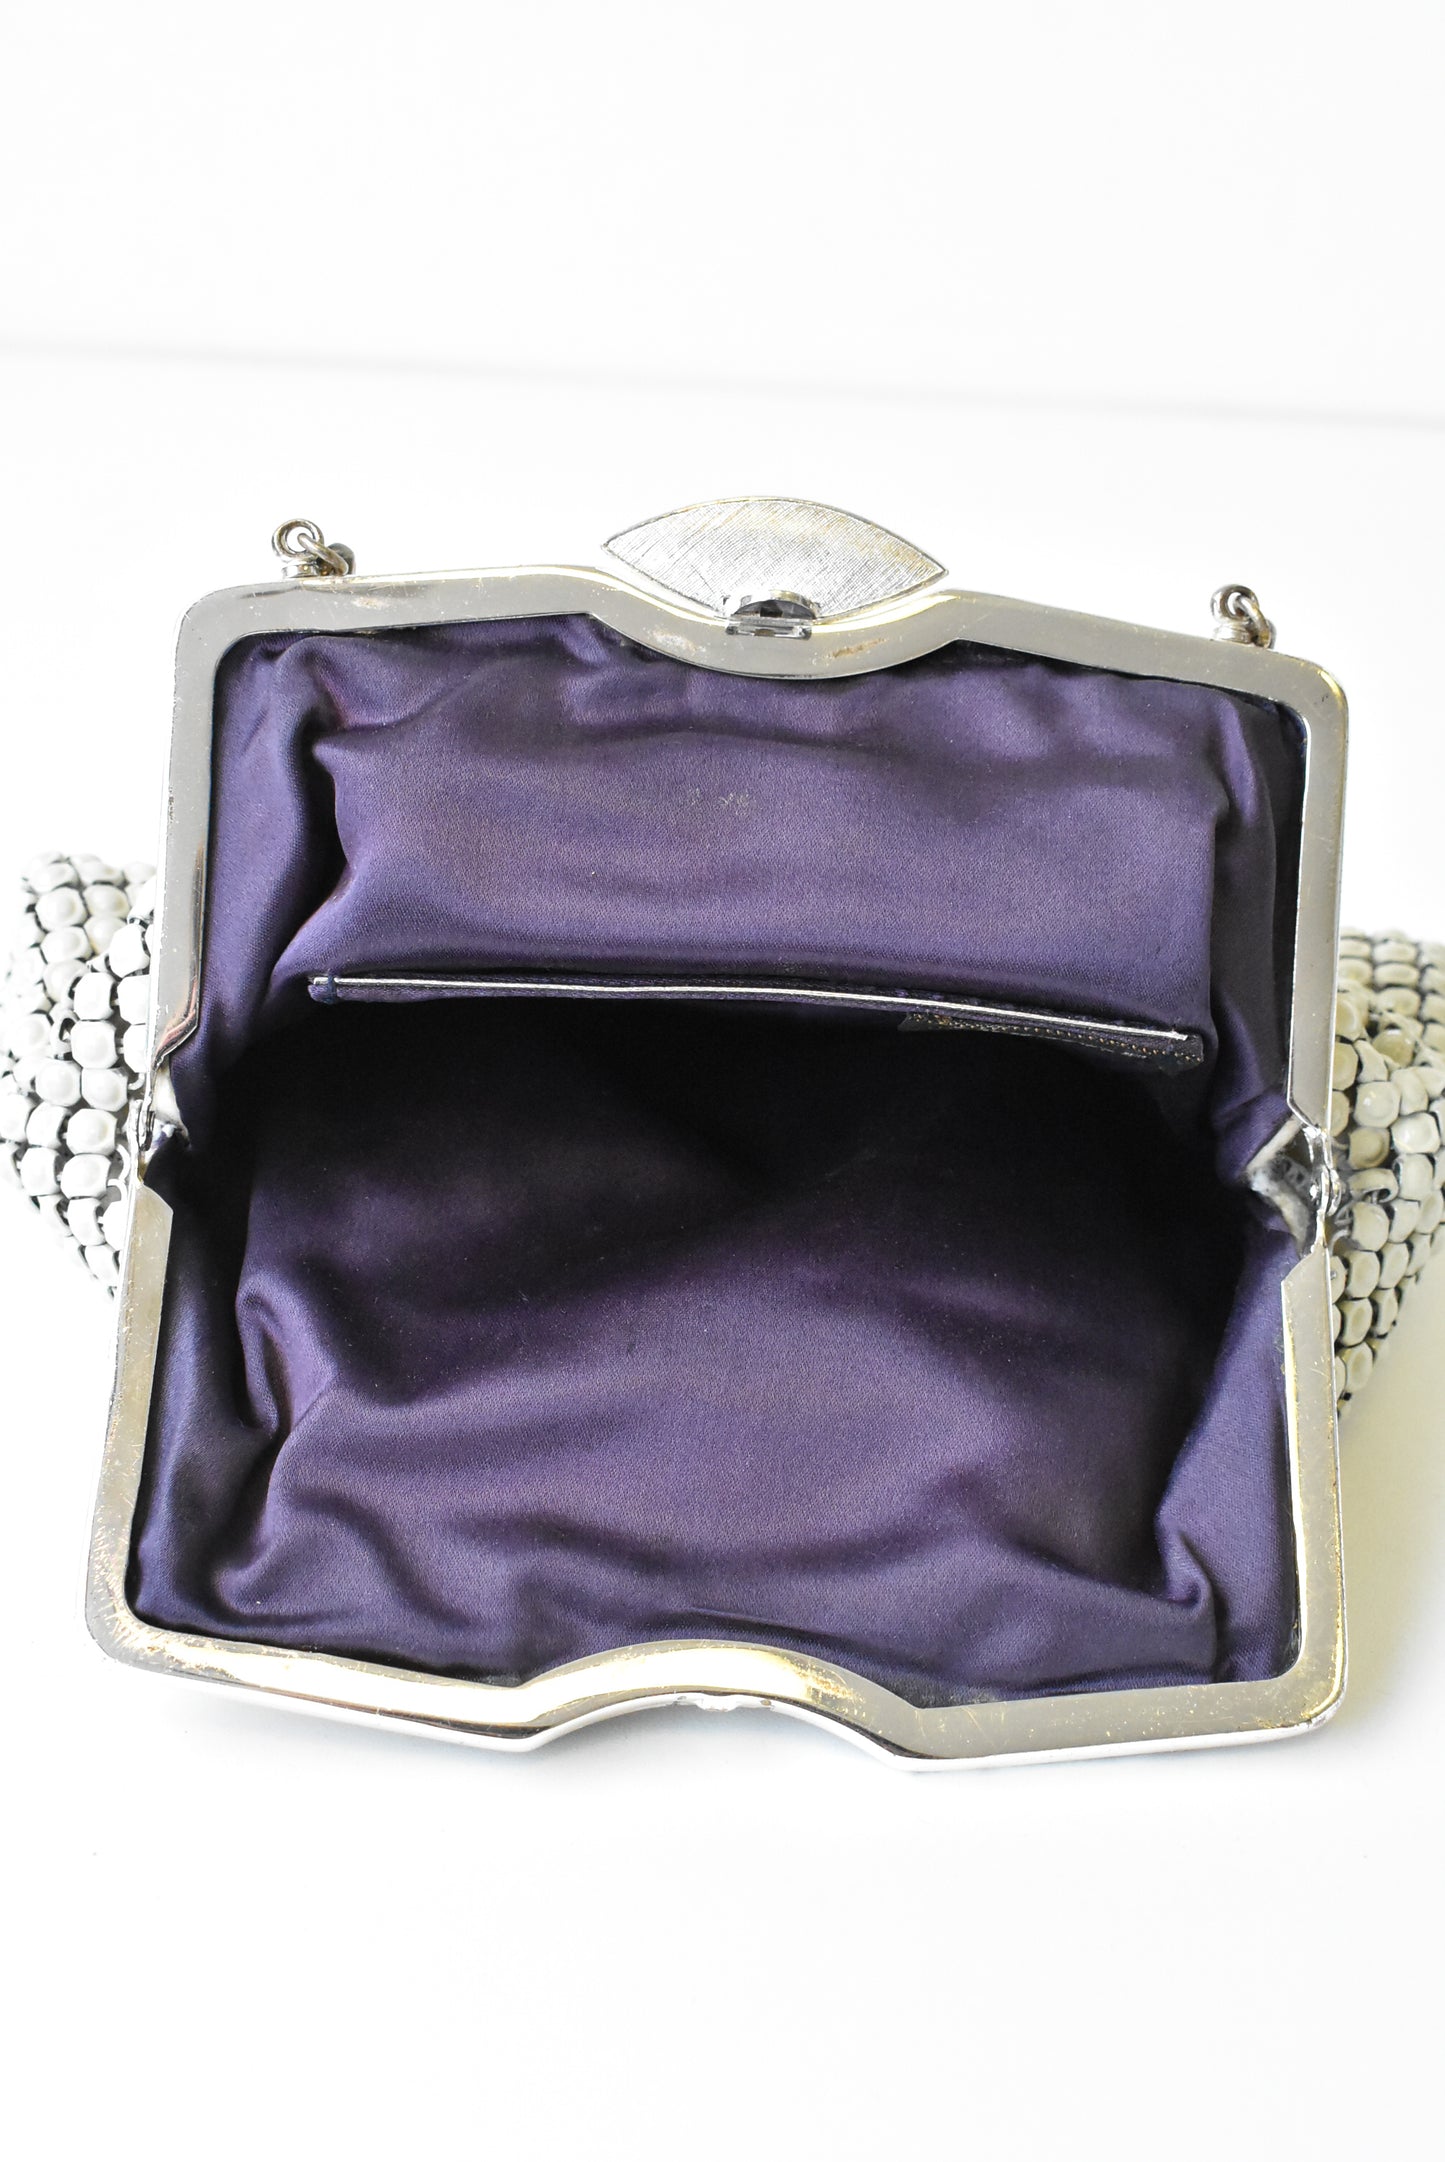 Oroton vintage mesh style clutch purse